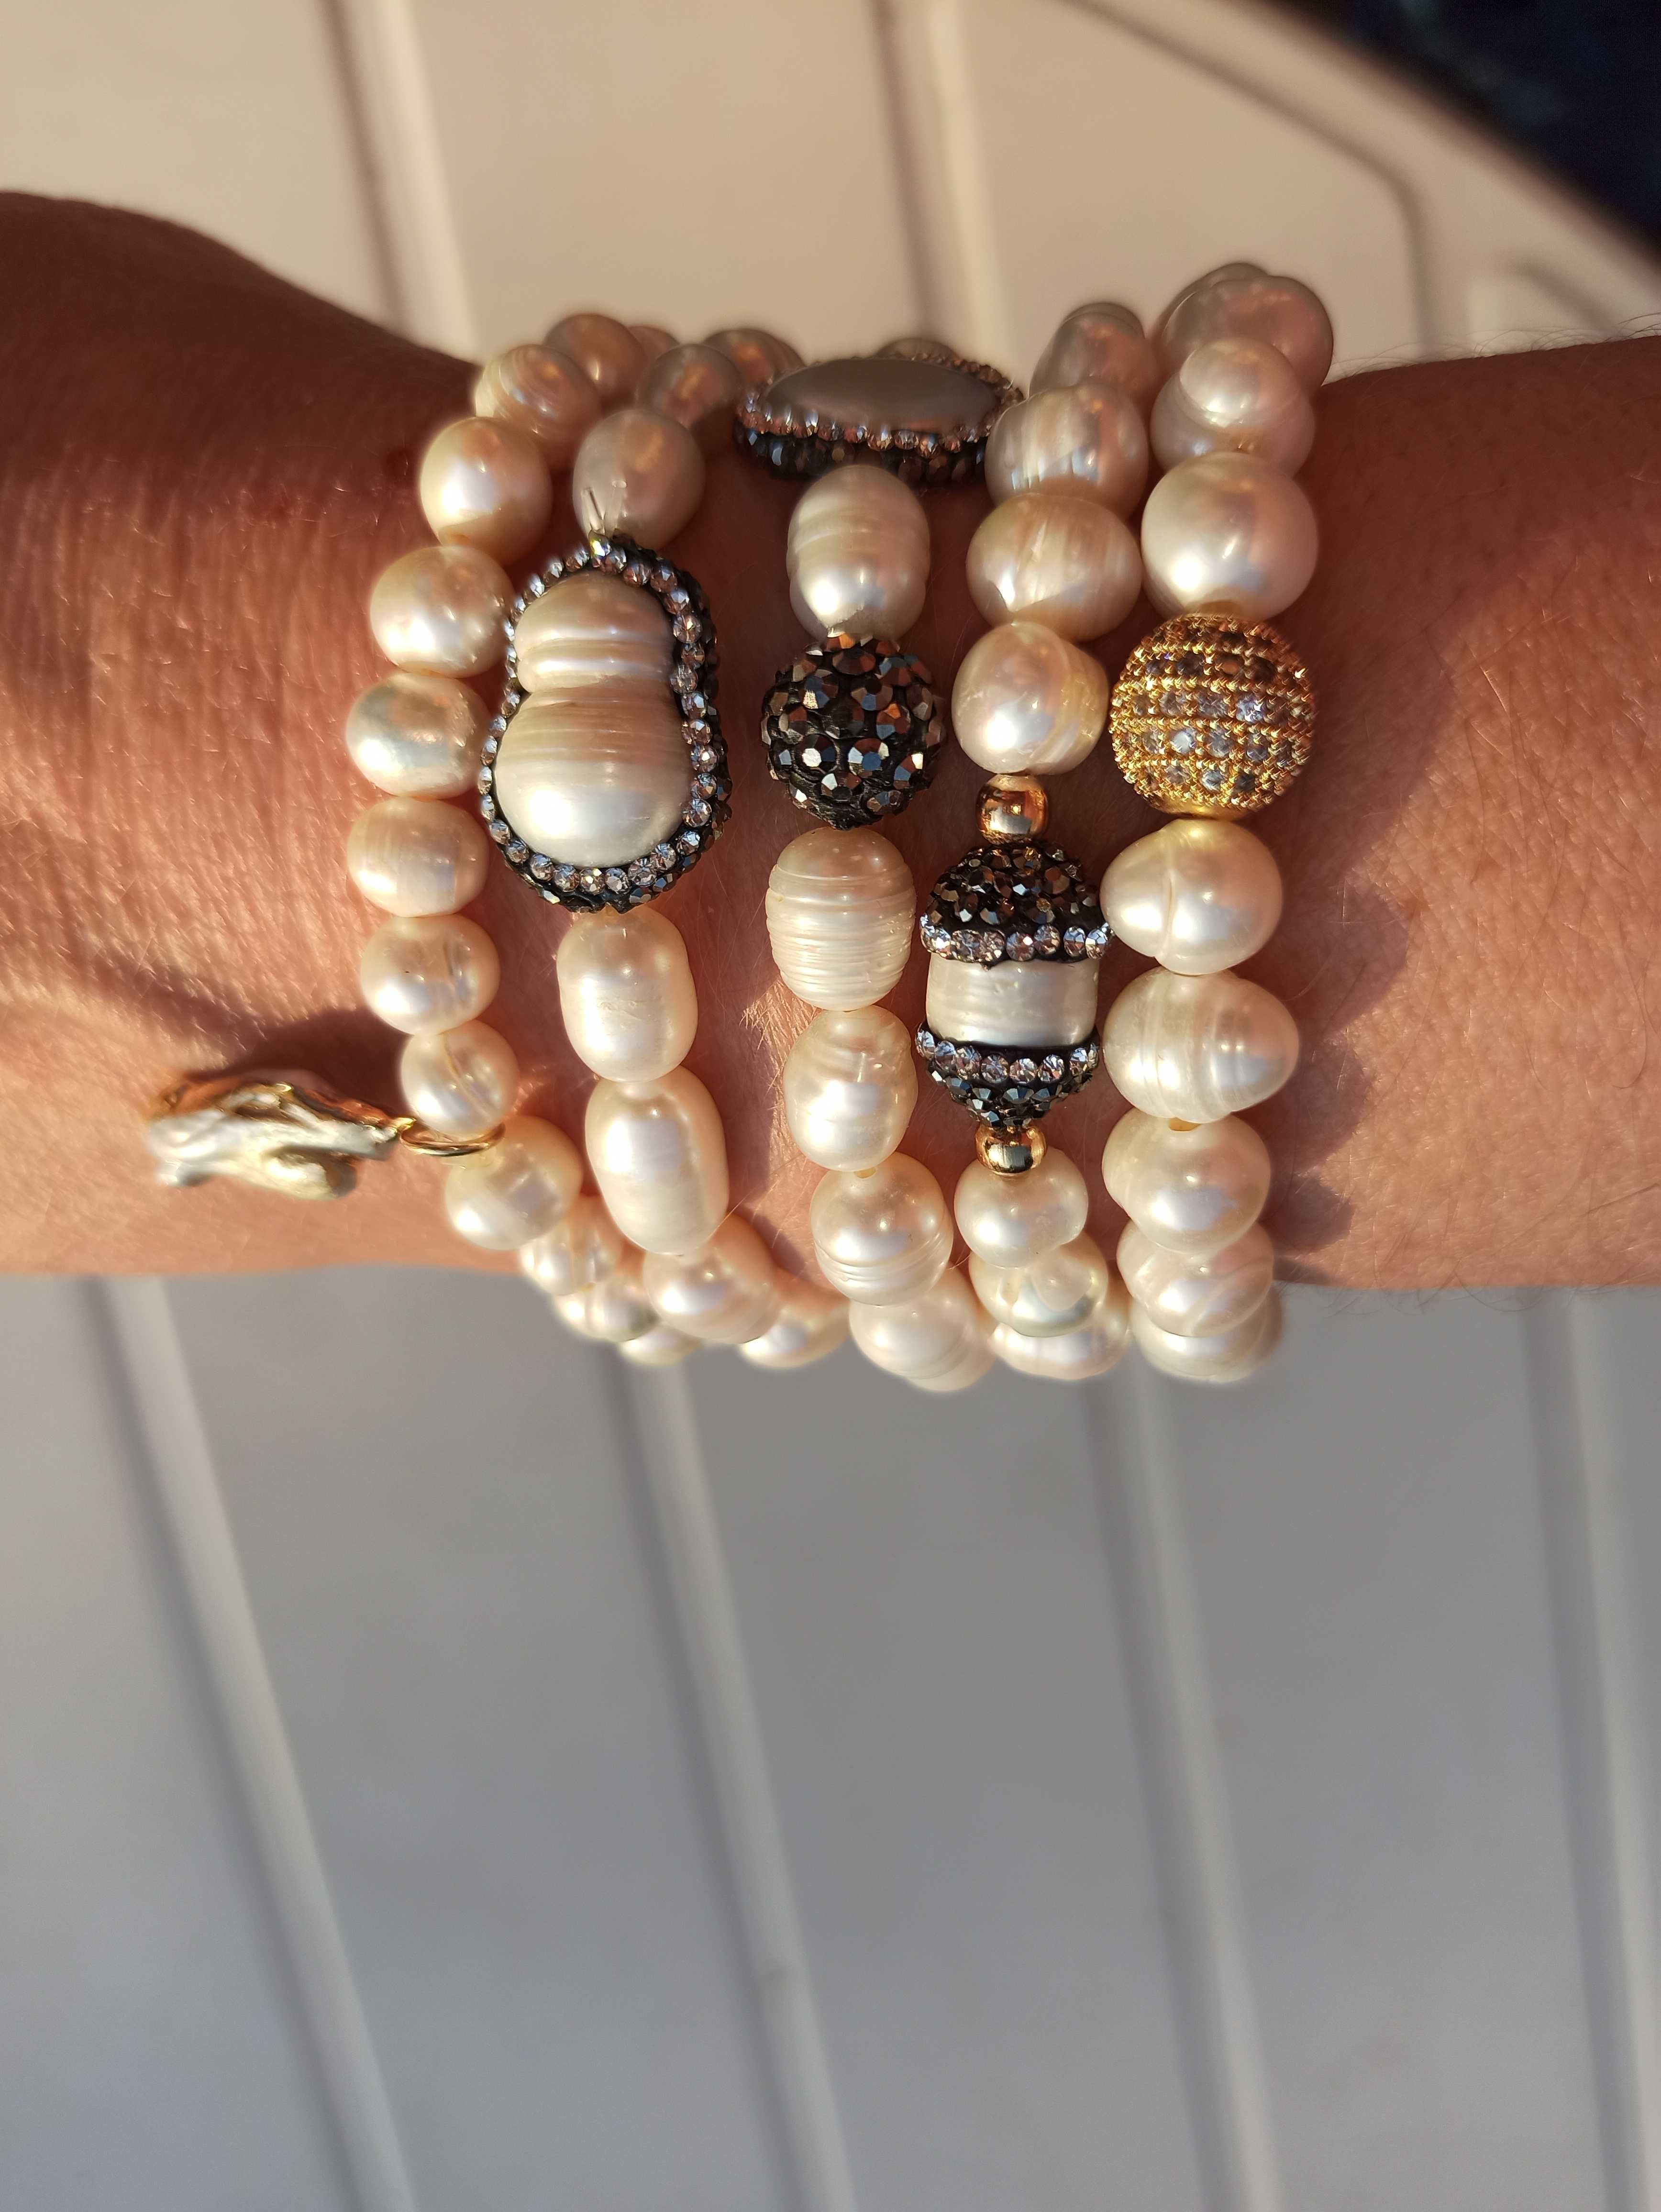 Cudne bransolety perły naturalne boho style